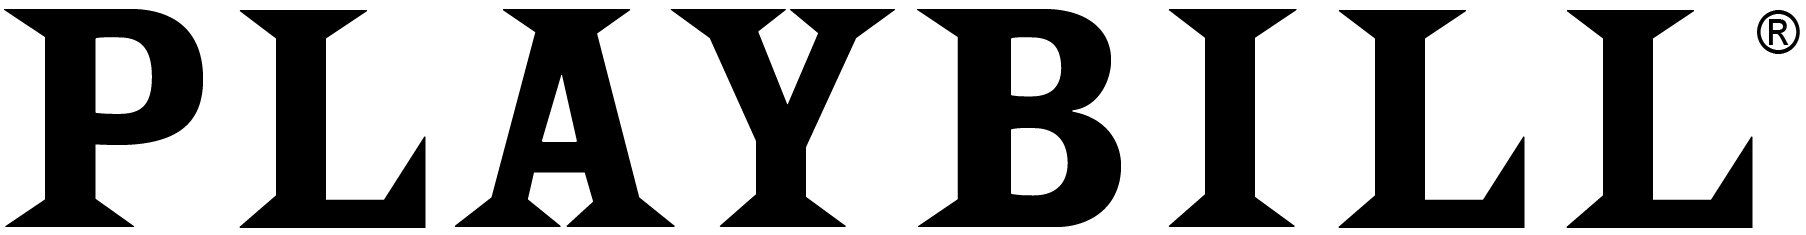 playbill_logo